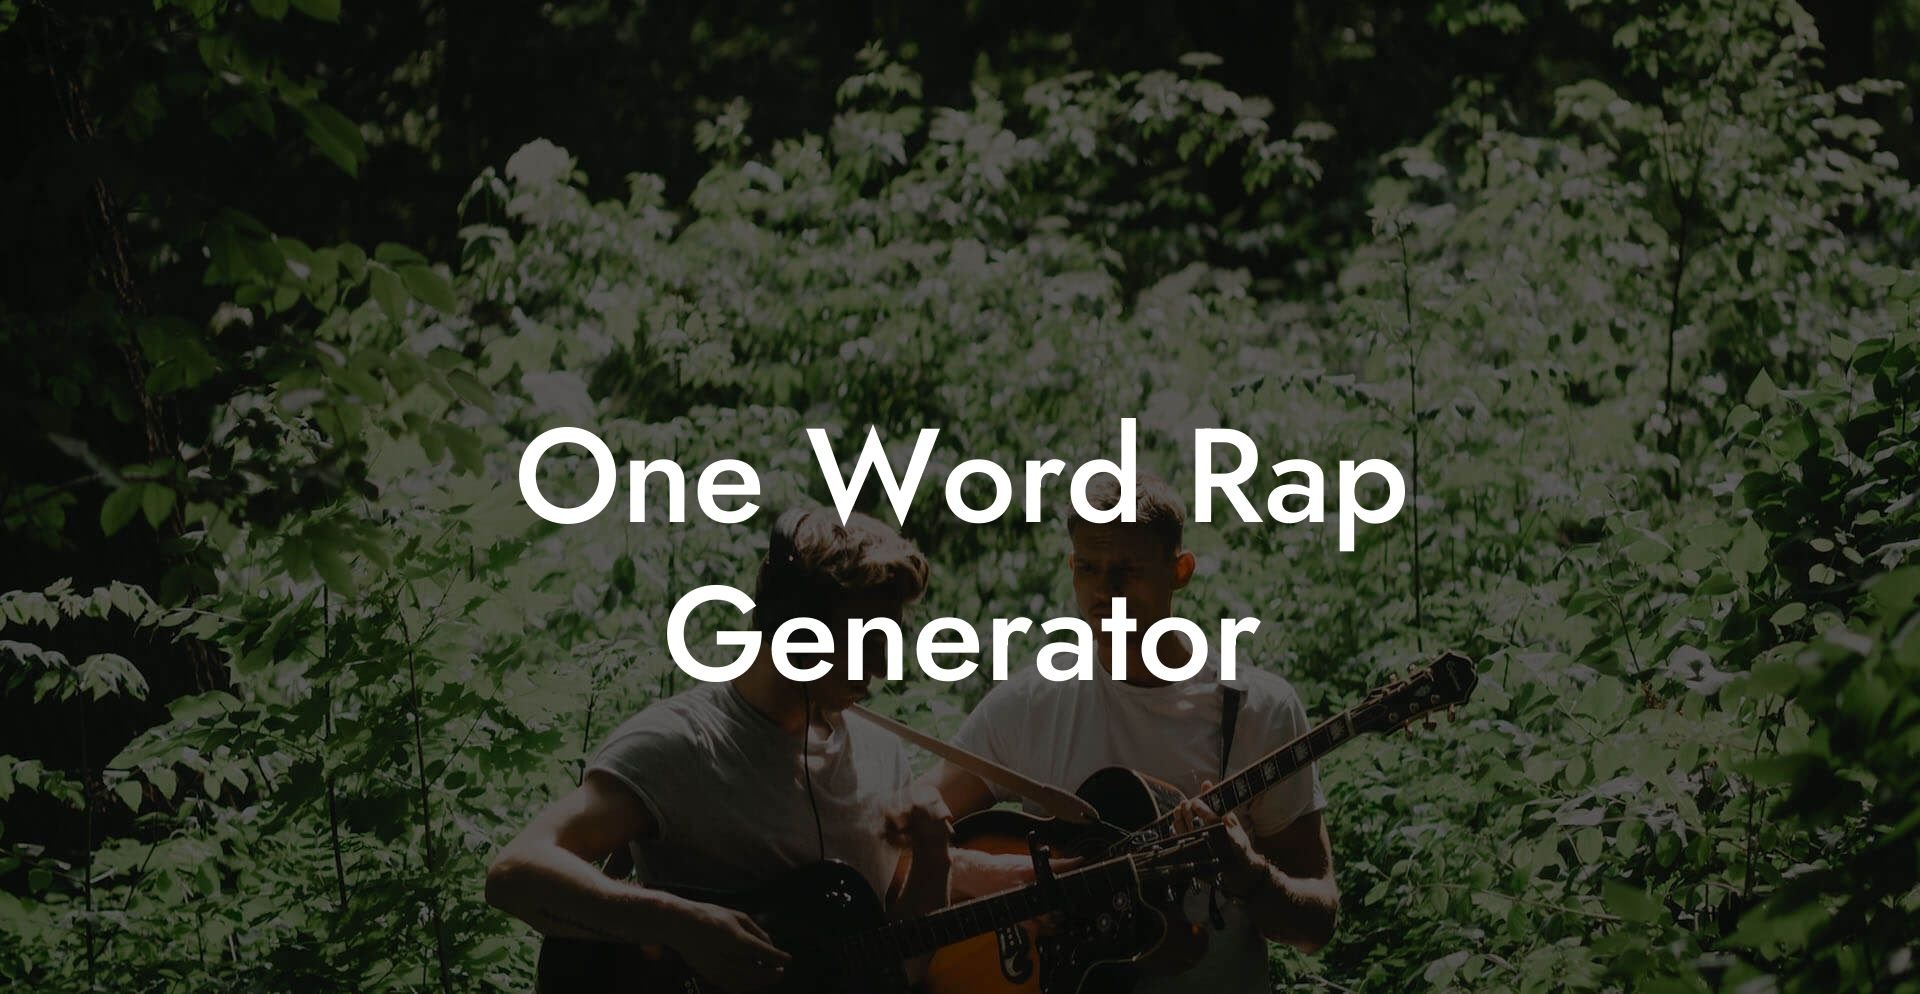 one word rap generator lyric assistant